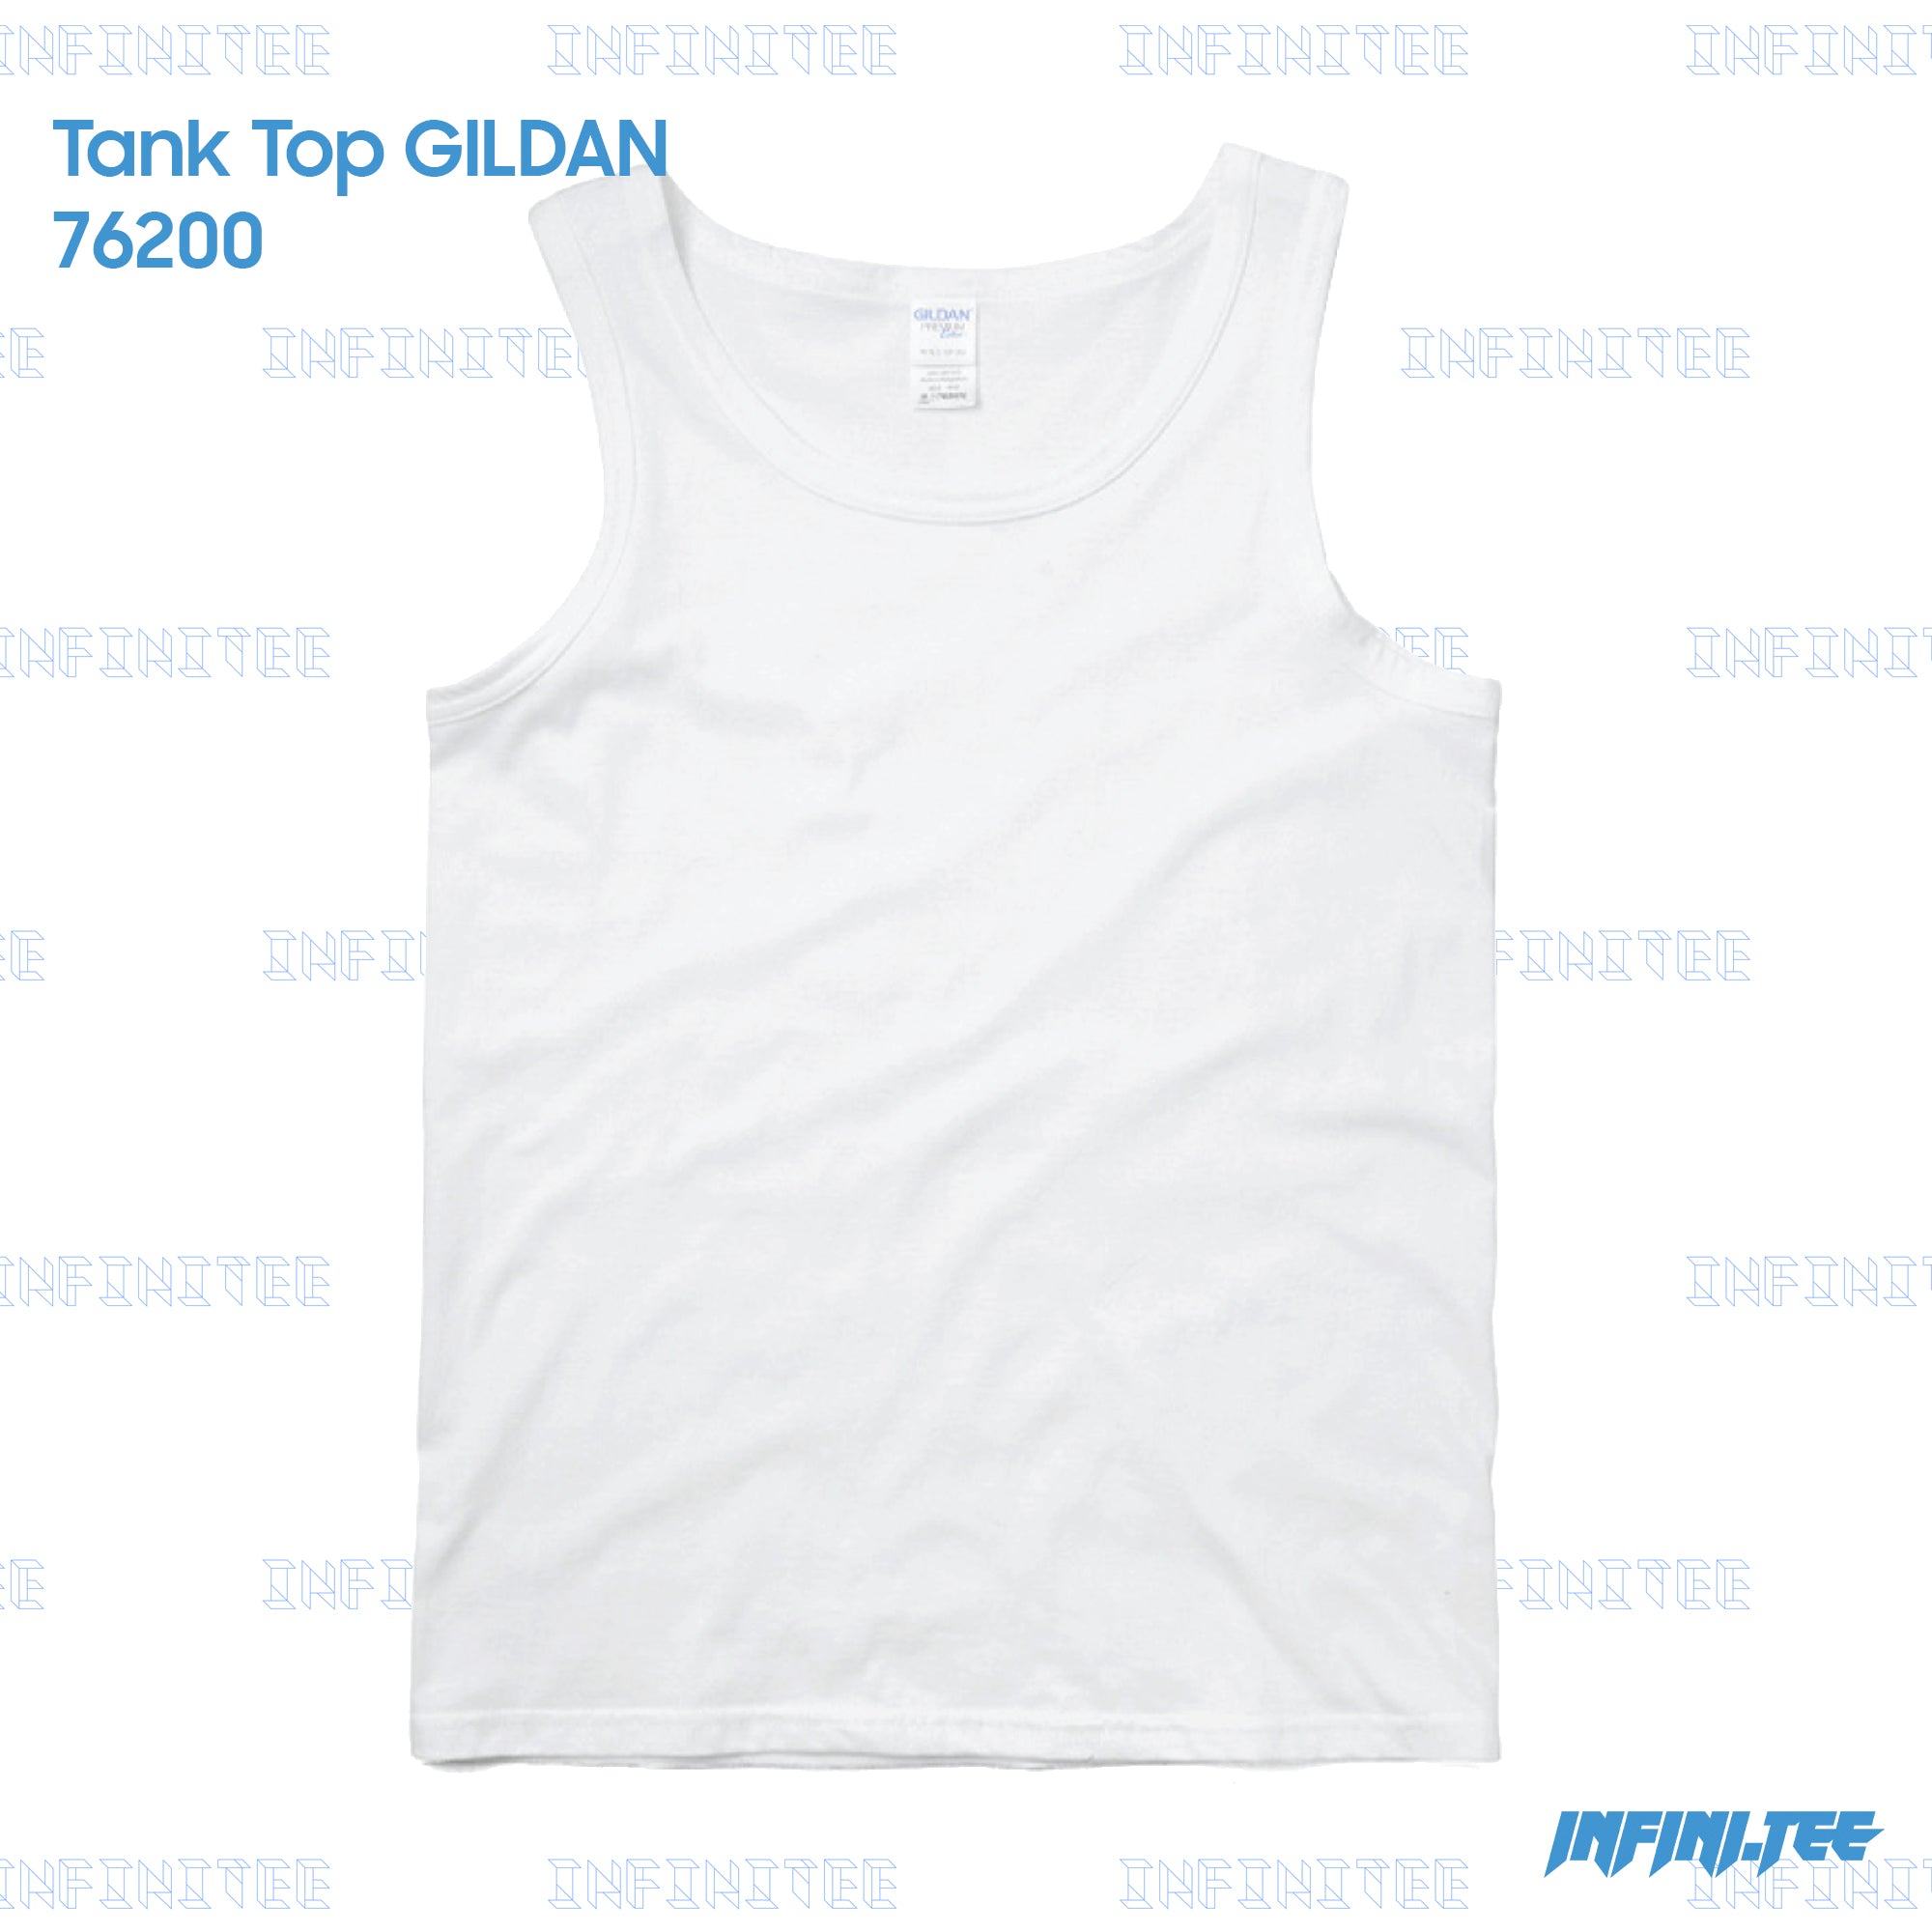 TANK TOP 76200 GILDAN - WHITE